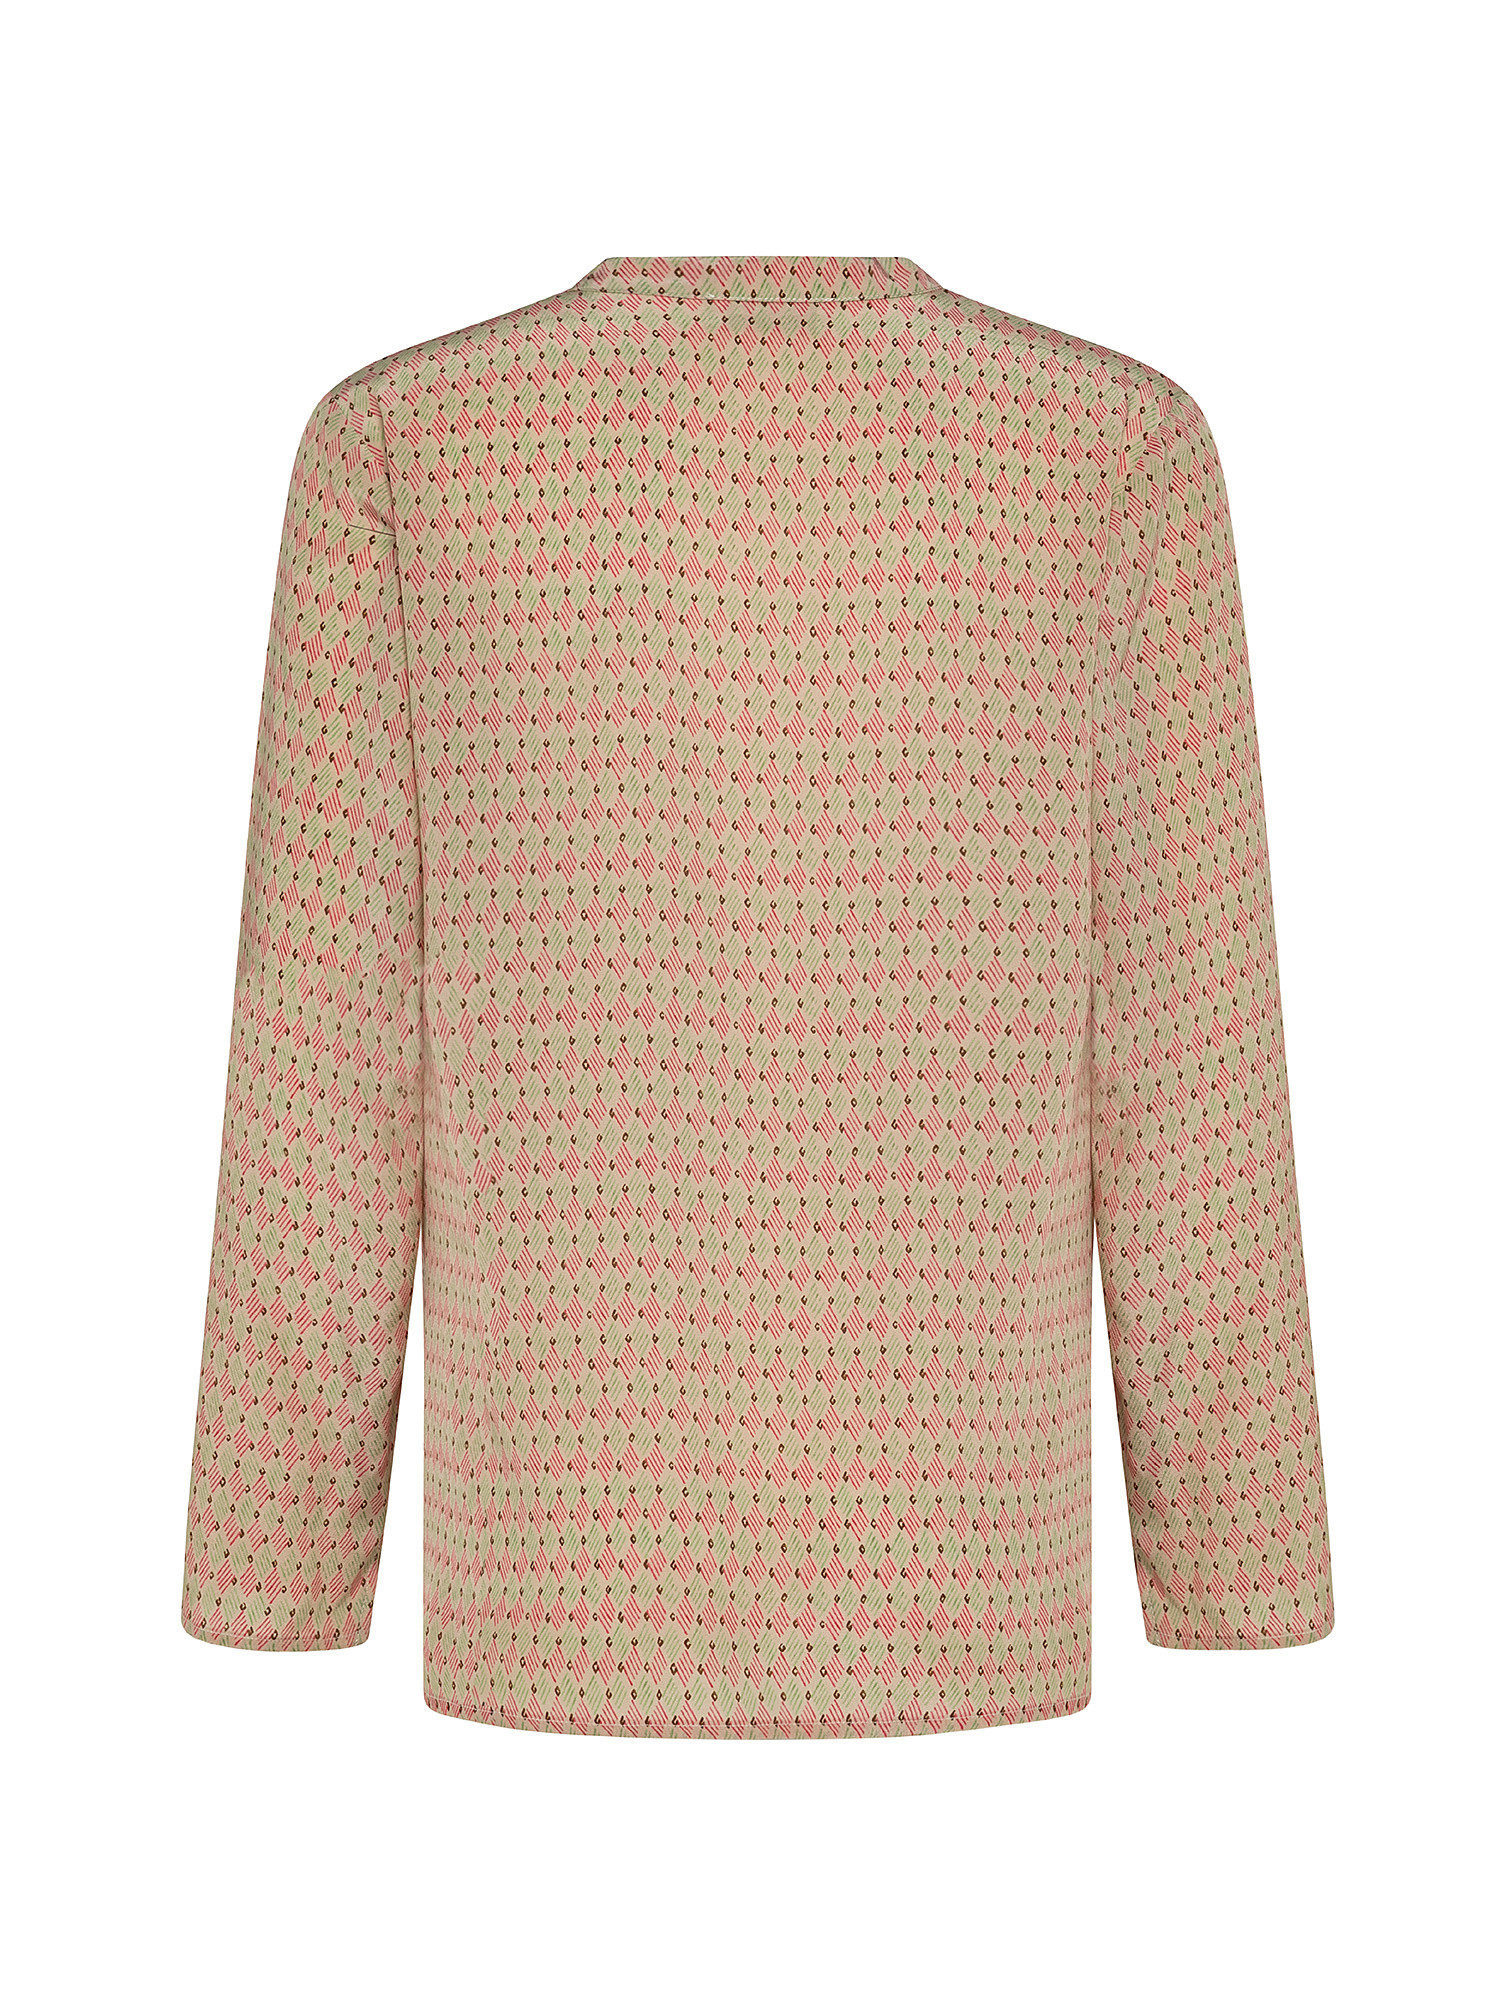 Berkeley blouse in printed silk crepe de chine, Pink, large image number 1